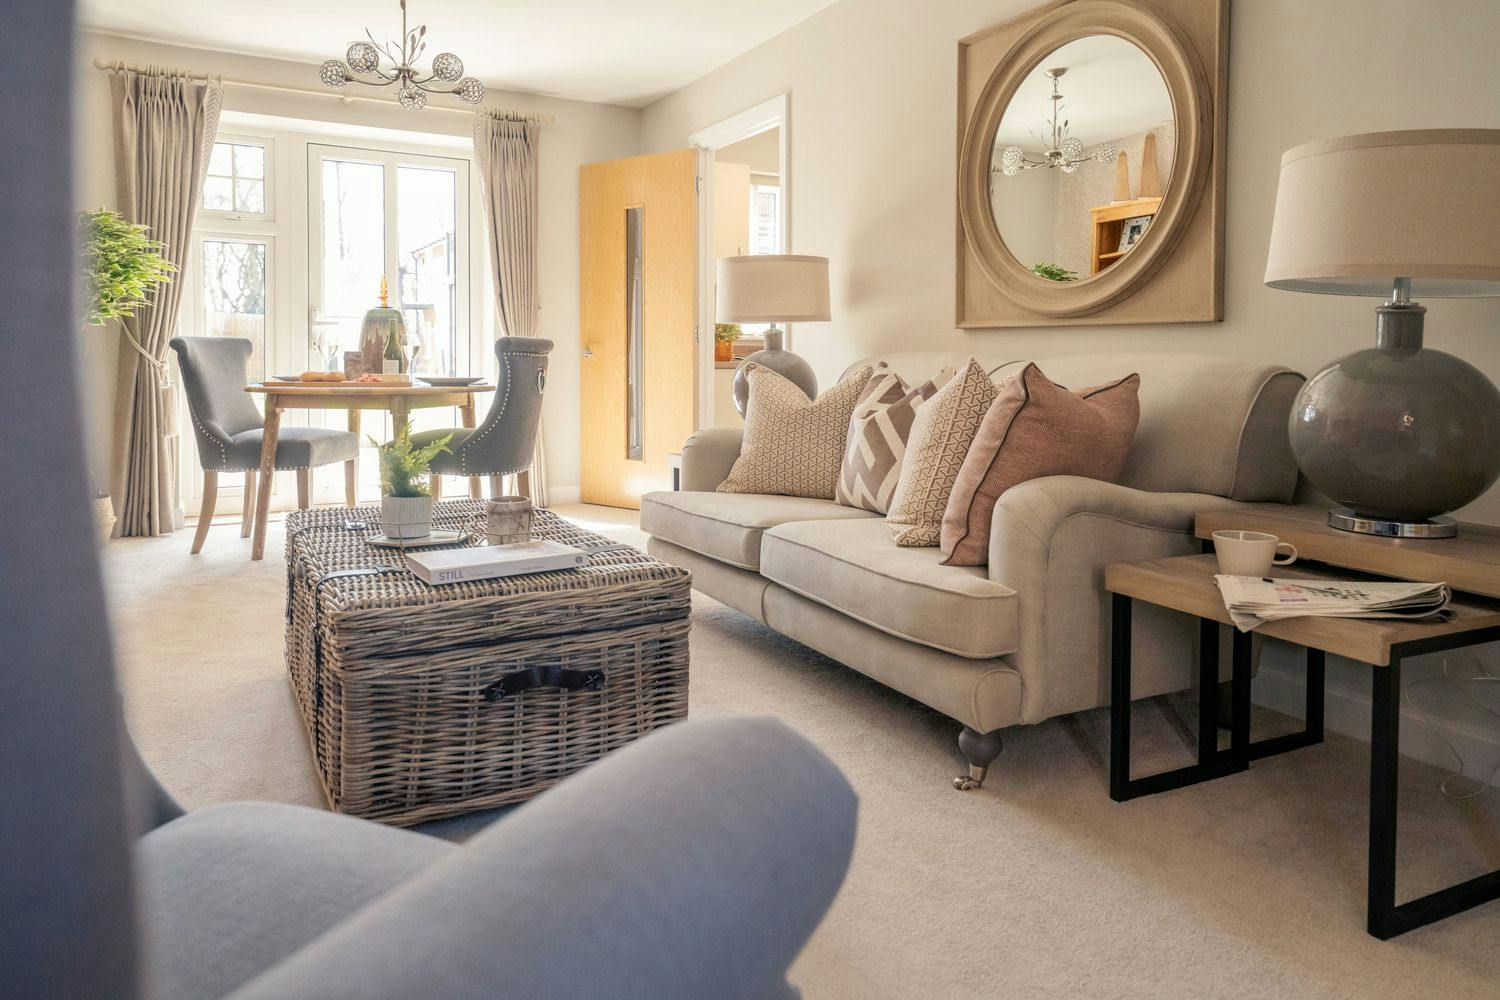 Living Room at Arden Grange Retirement Development in Solihull, West Midlands